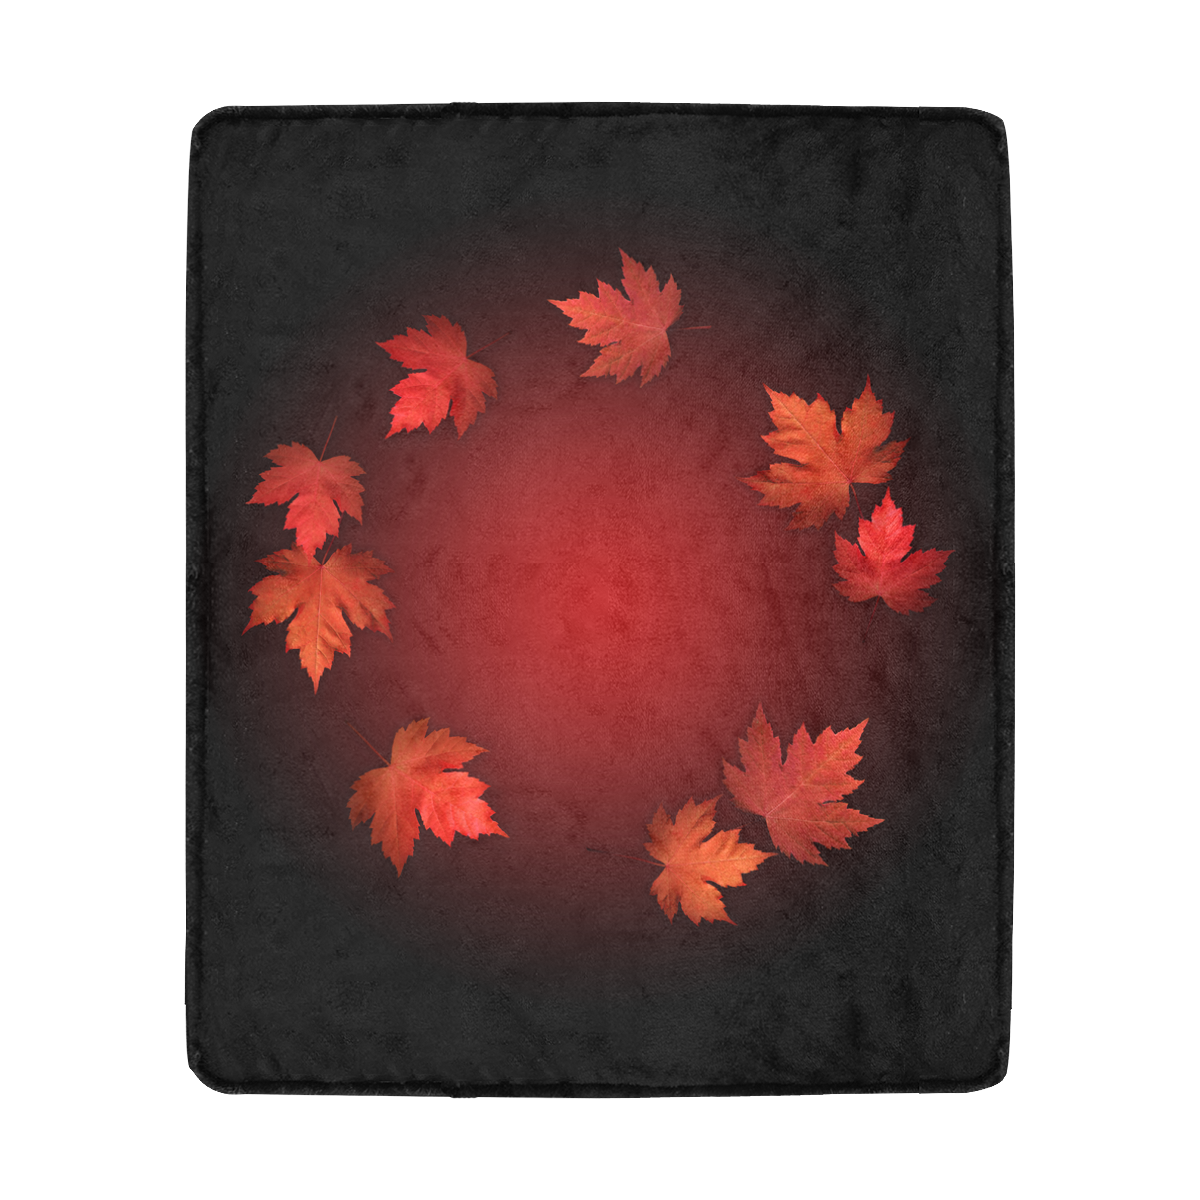 Autumn Maple Leaves Blankets Canada Souvenir Ultra-Soft Micro Fleece Blanket 50"x60"